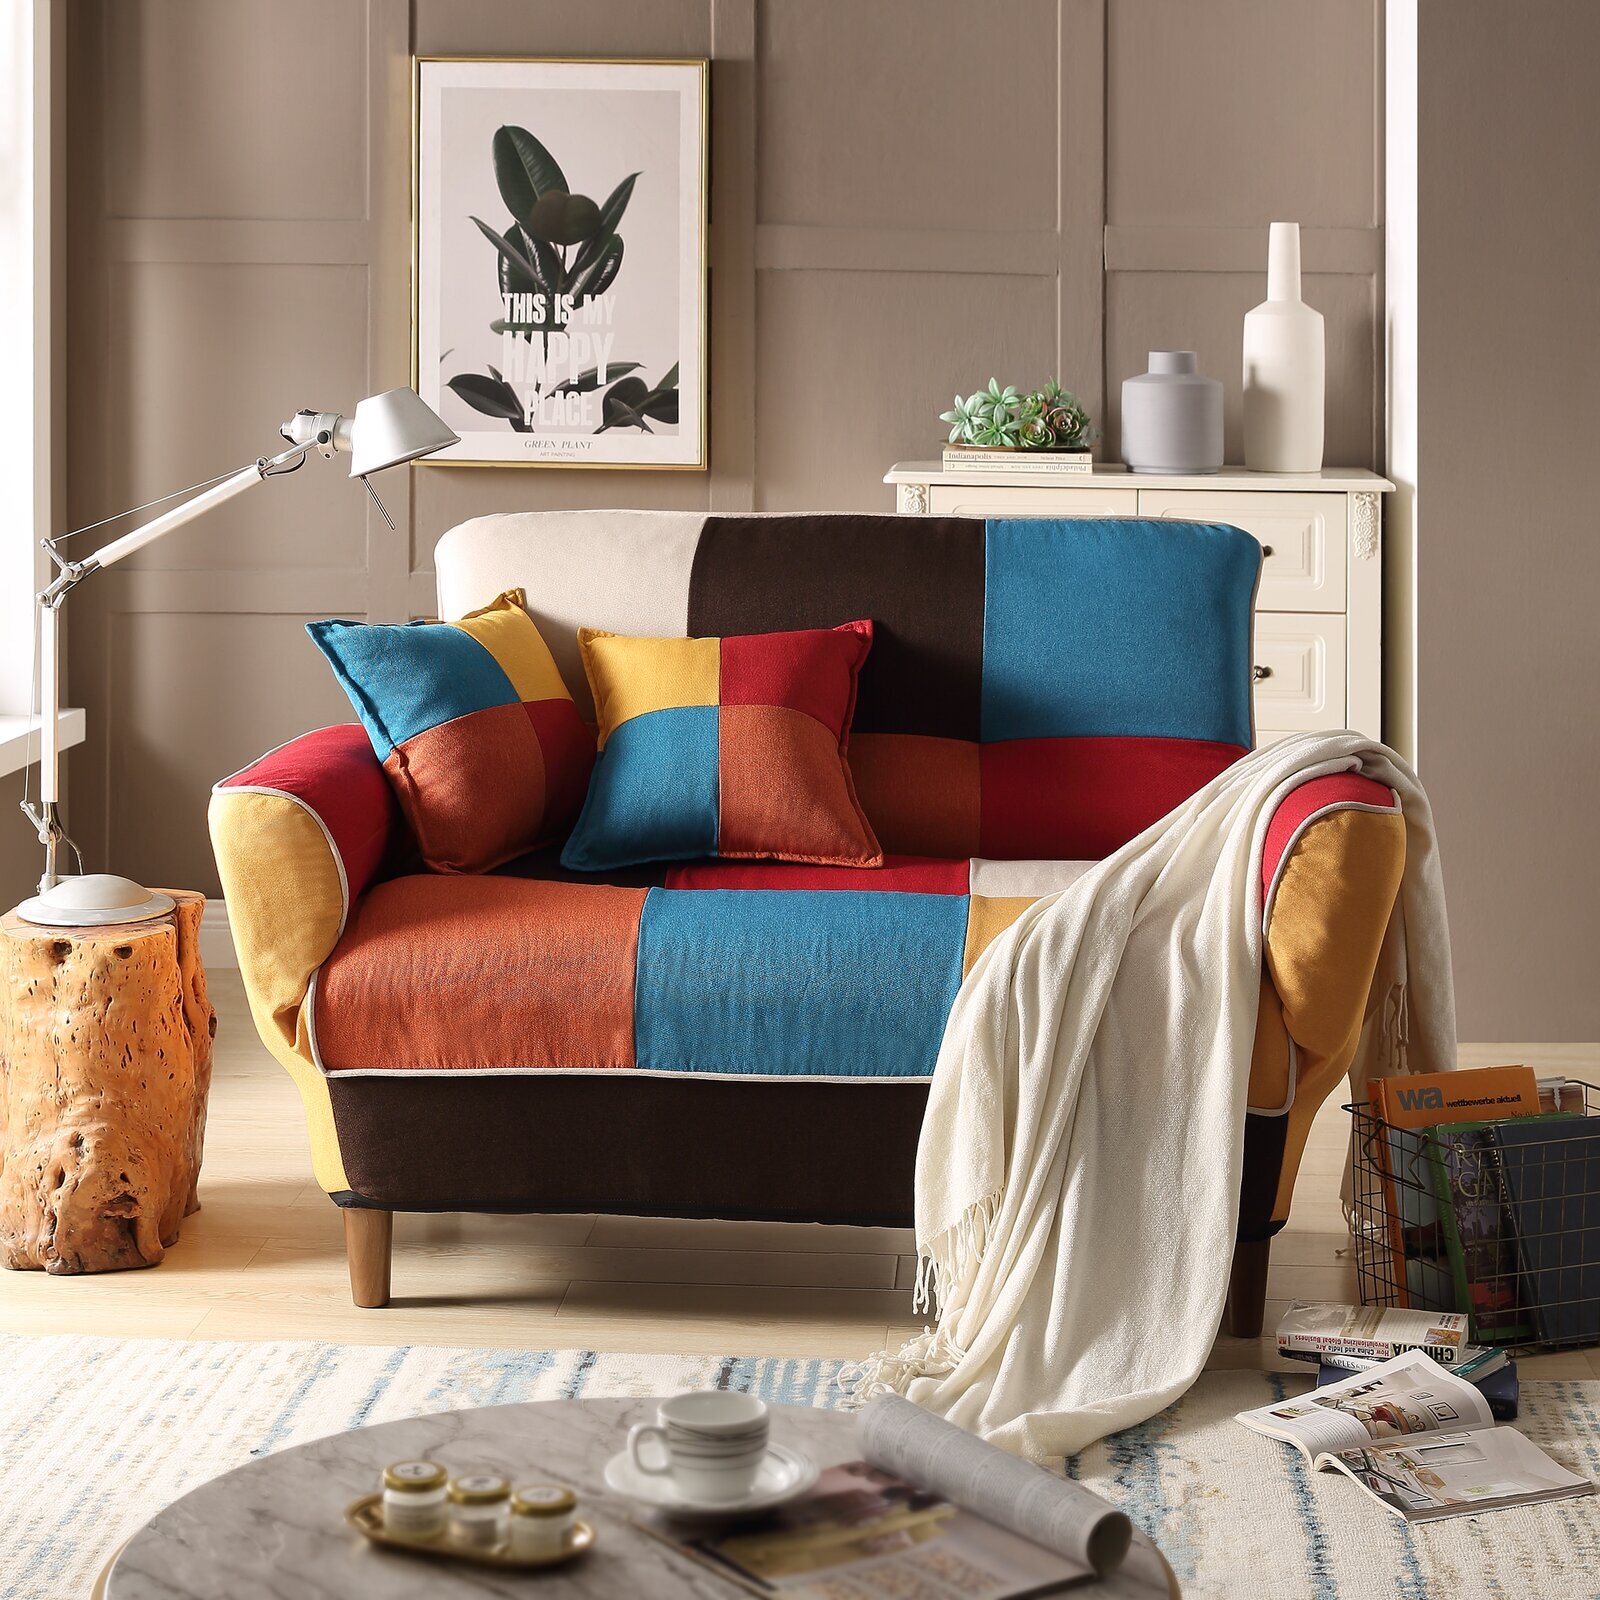 A bright, multicolored seating furniture